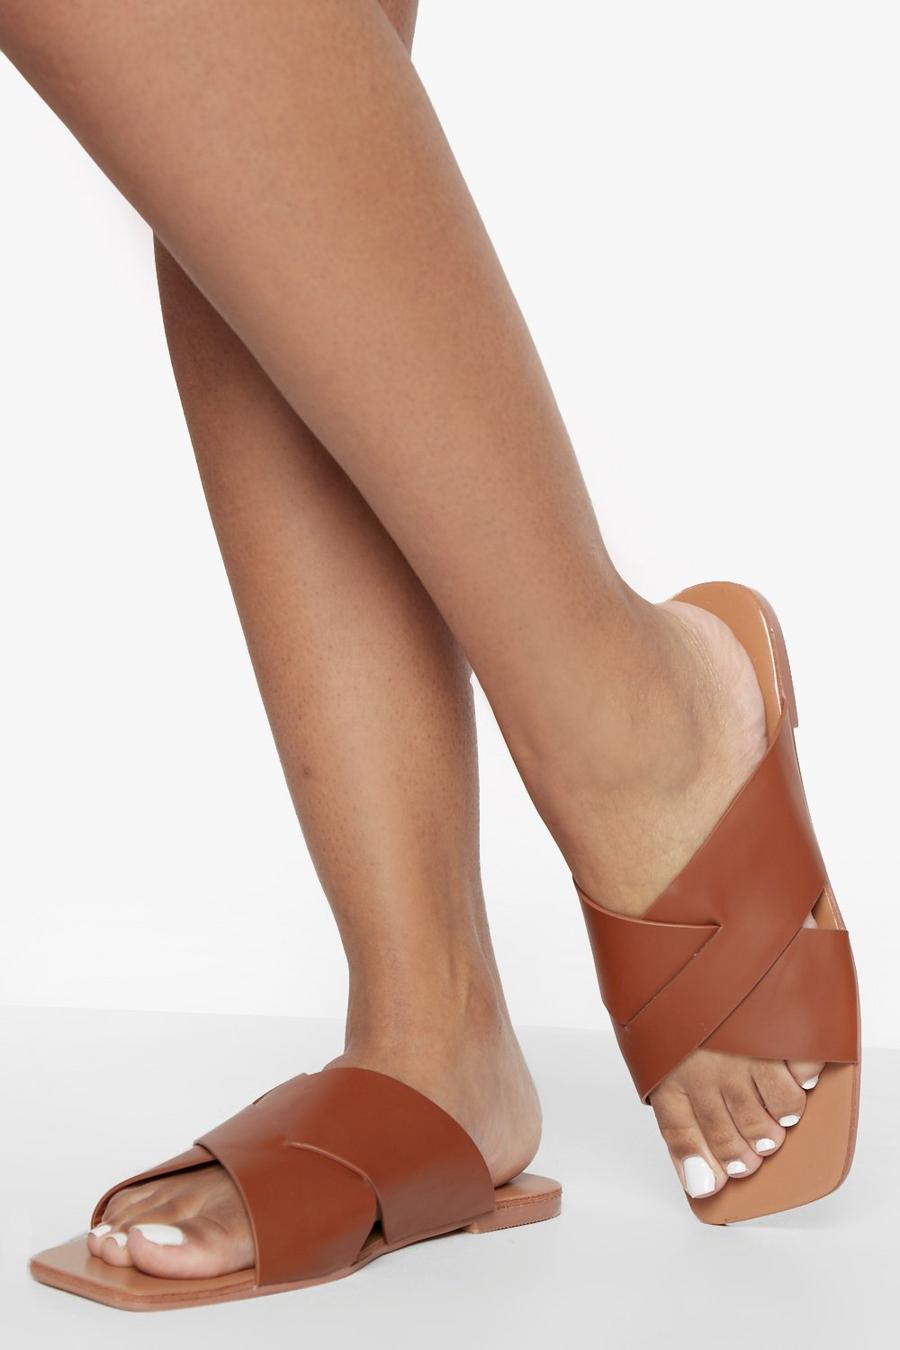 Sandali Mules a calzata ampia a punta quadrata con fascette incrociate, Tan marrone